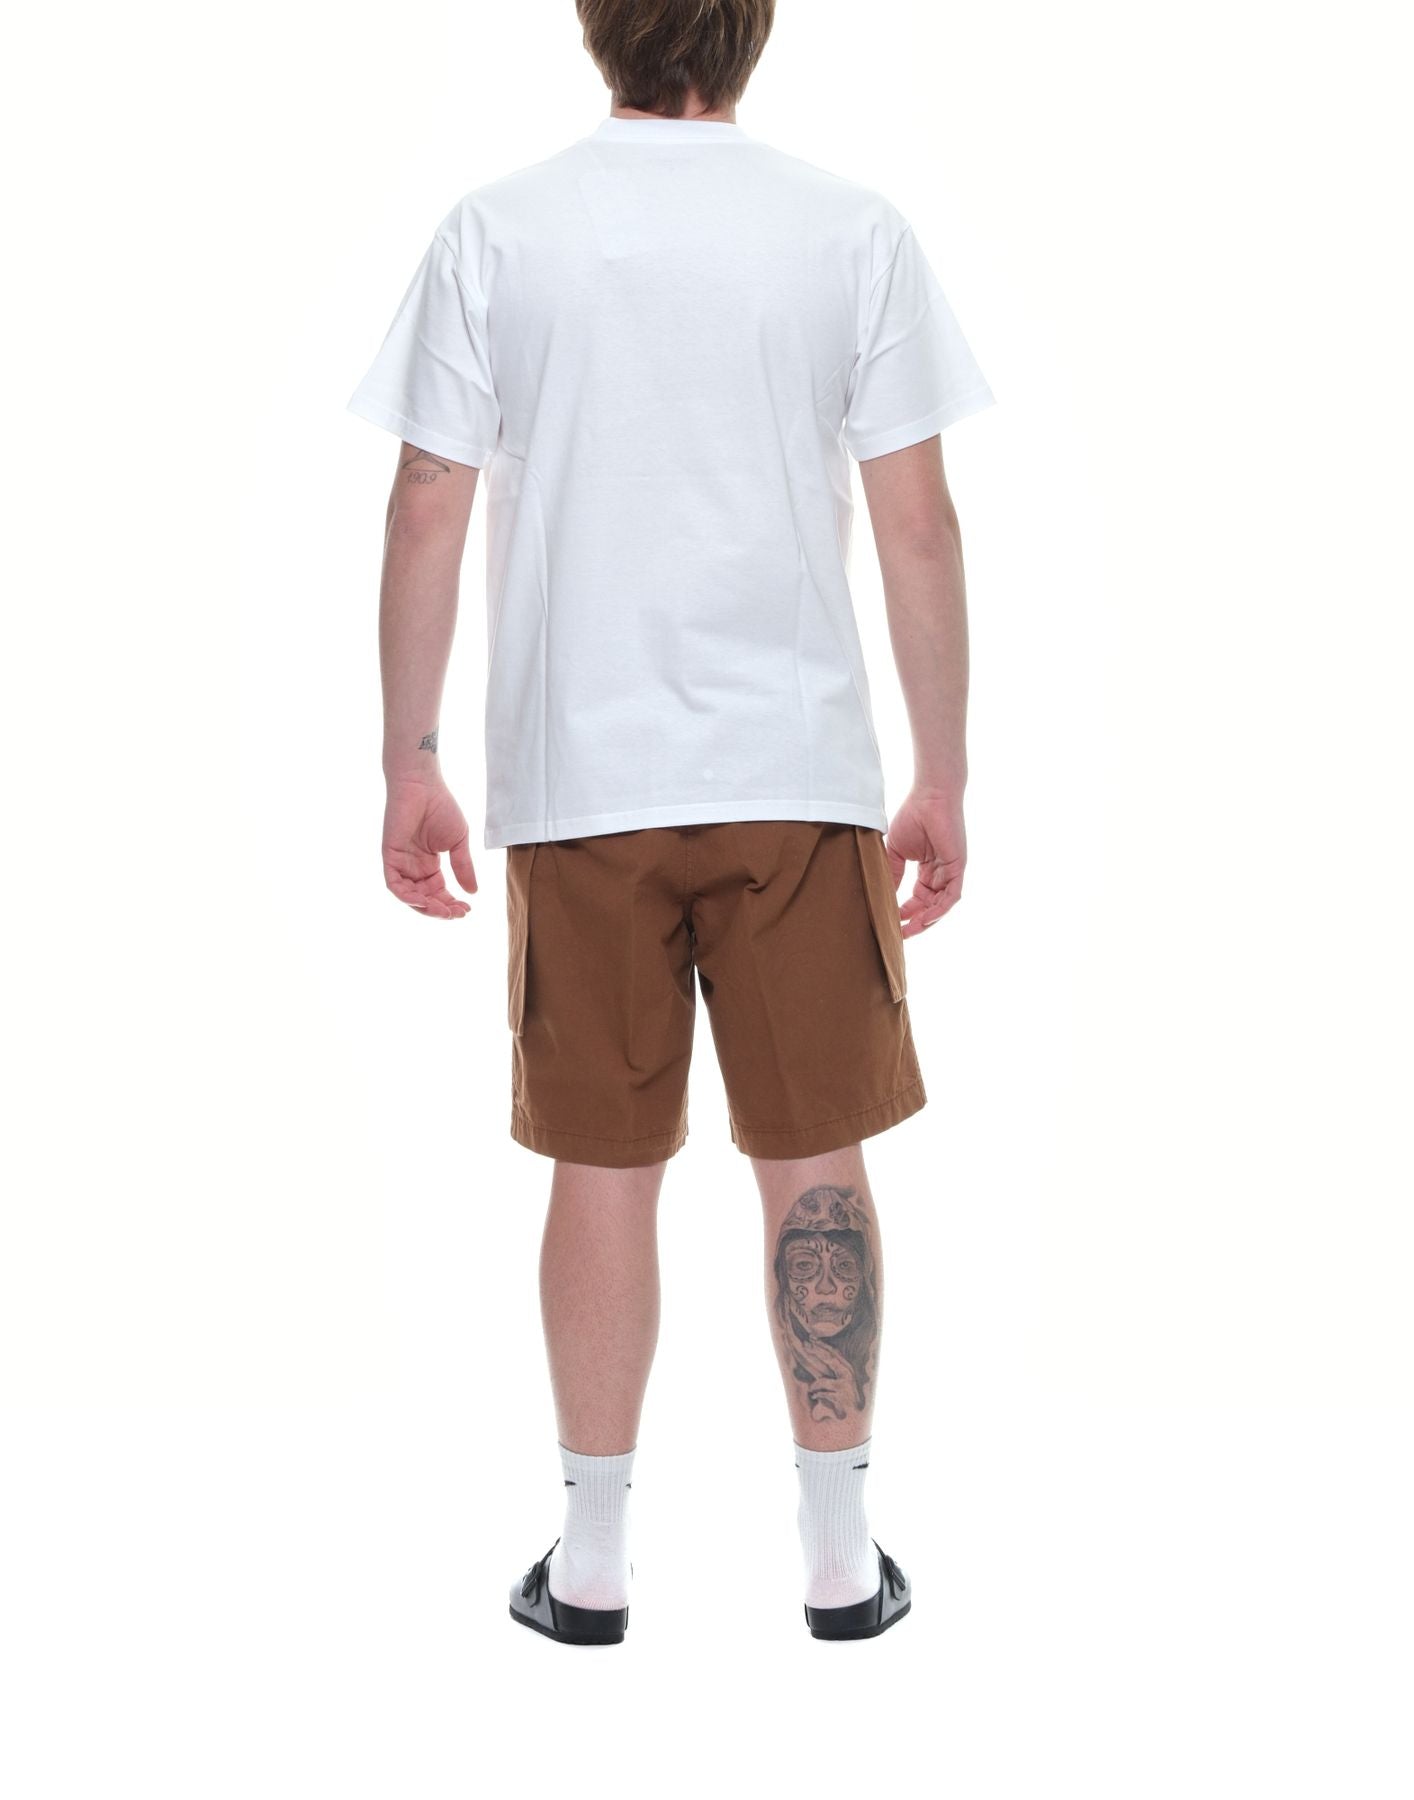 T-shirt Man I033160 T-shirt Drip White Carhartt Wip